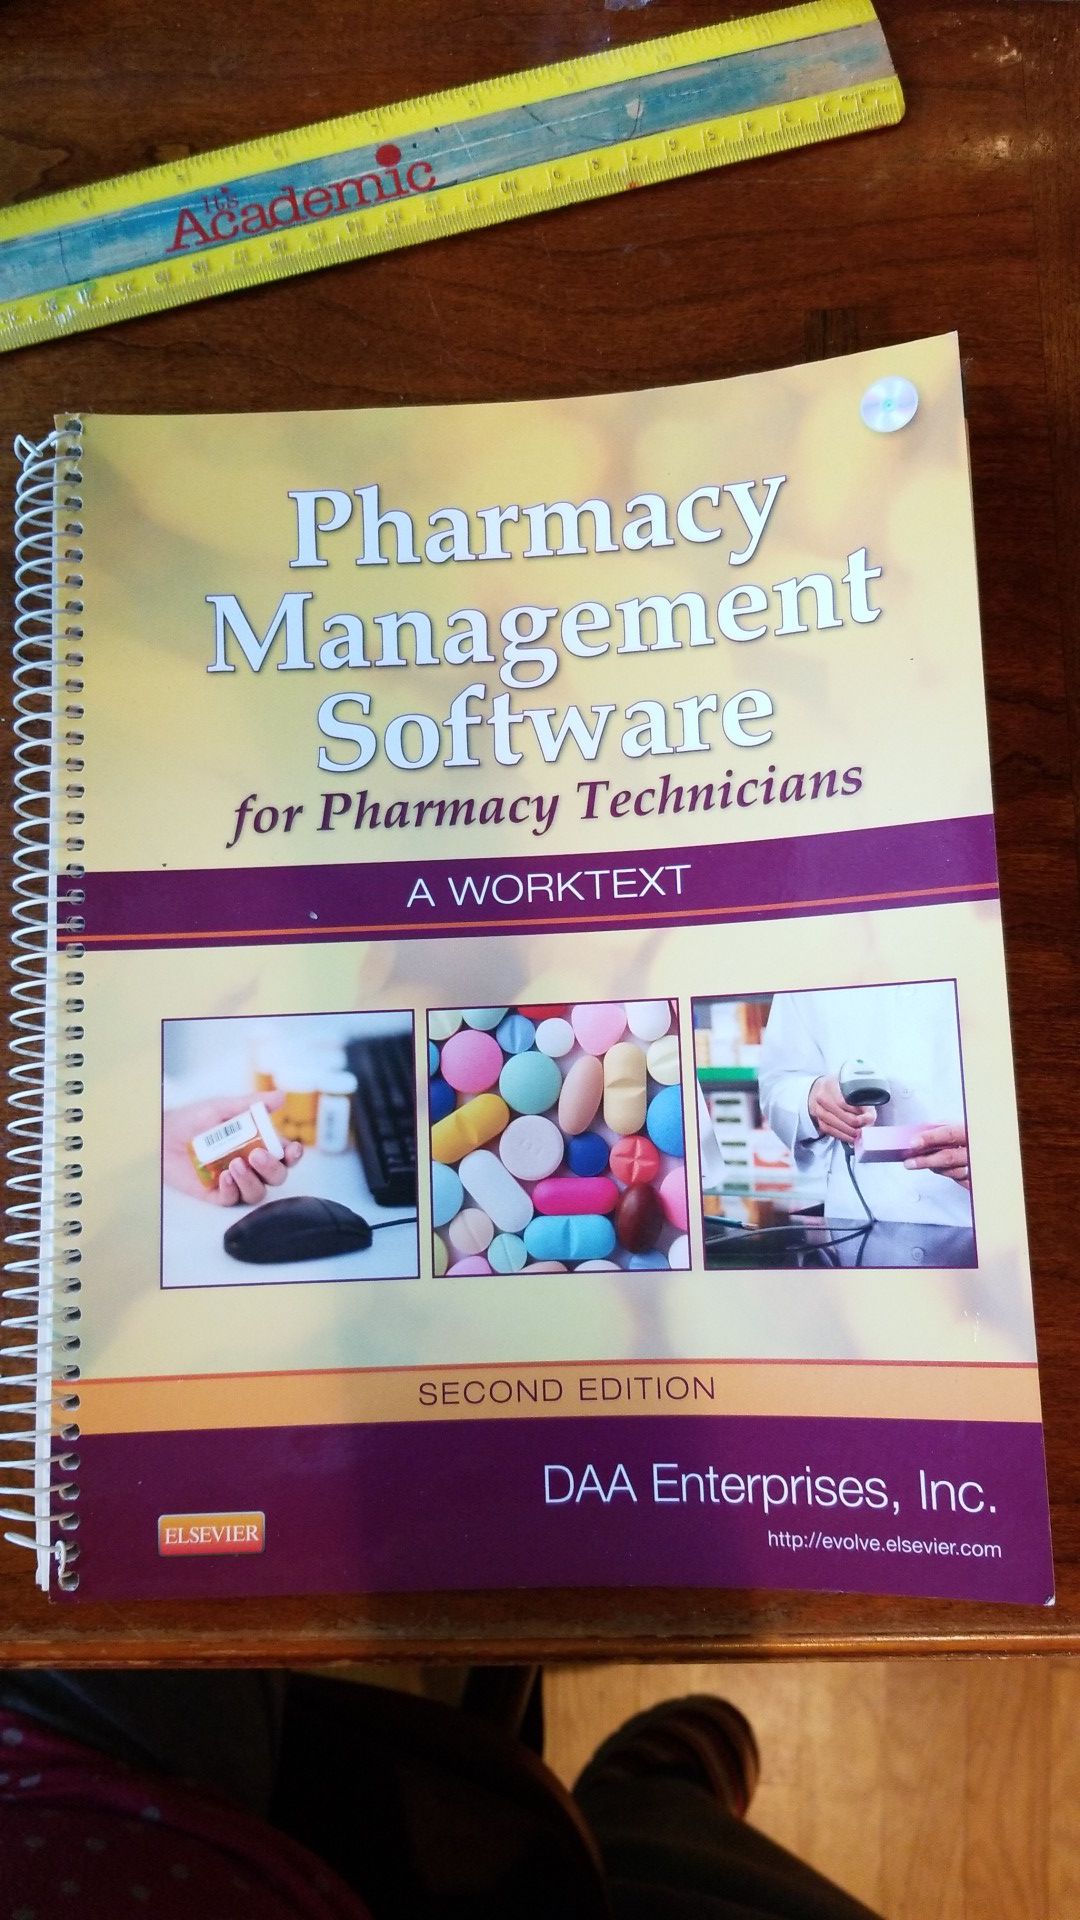 Pharmacy Management Software training program for Pharmacy technicians